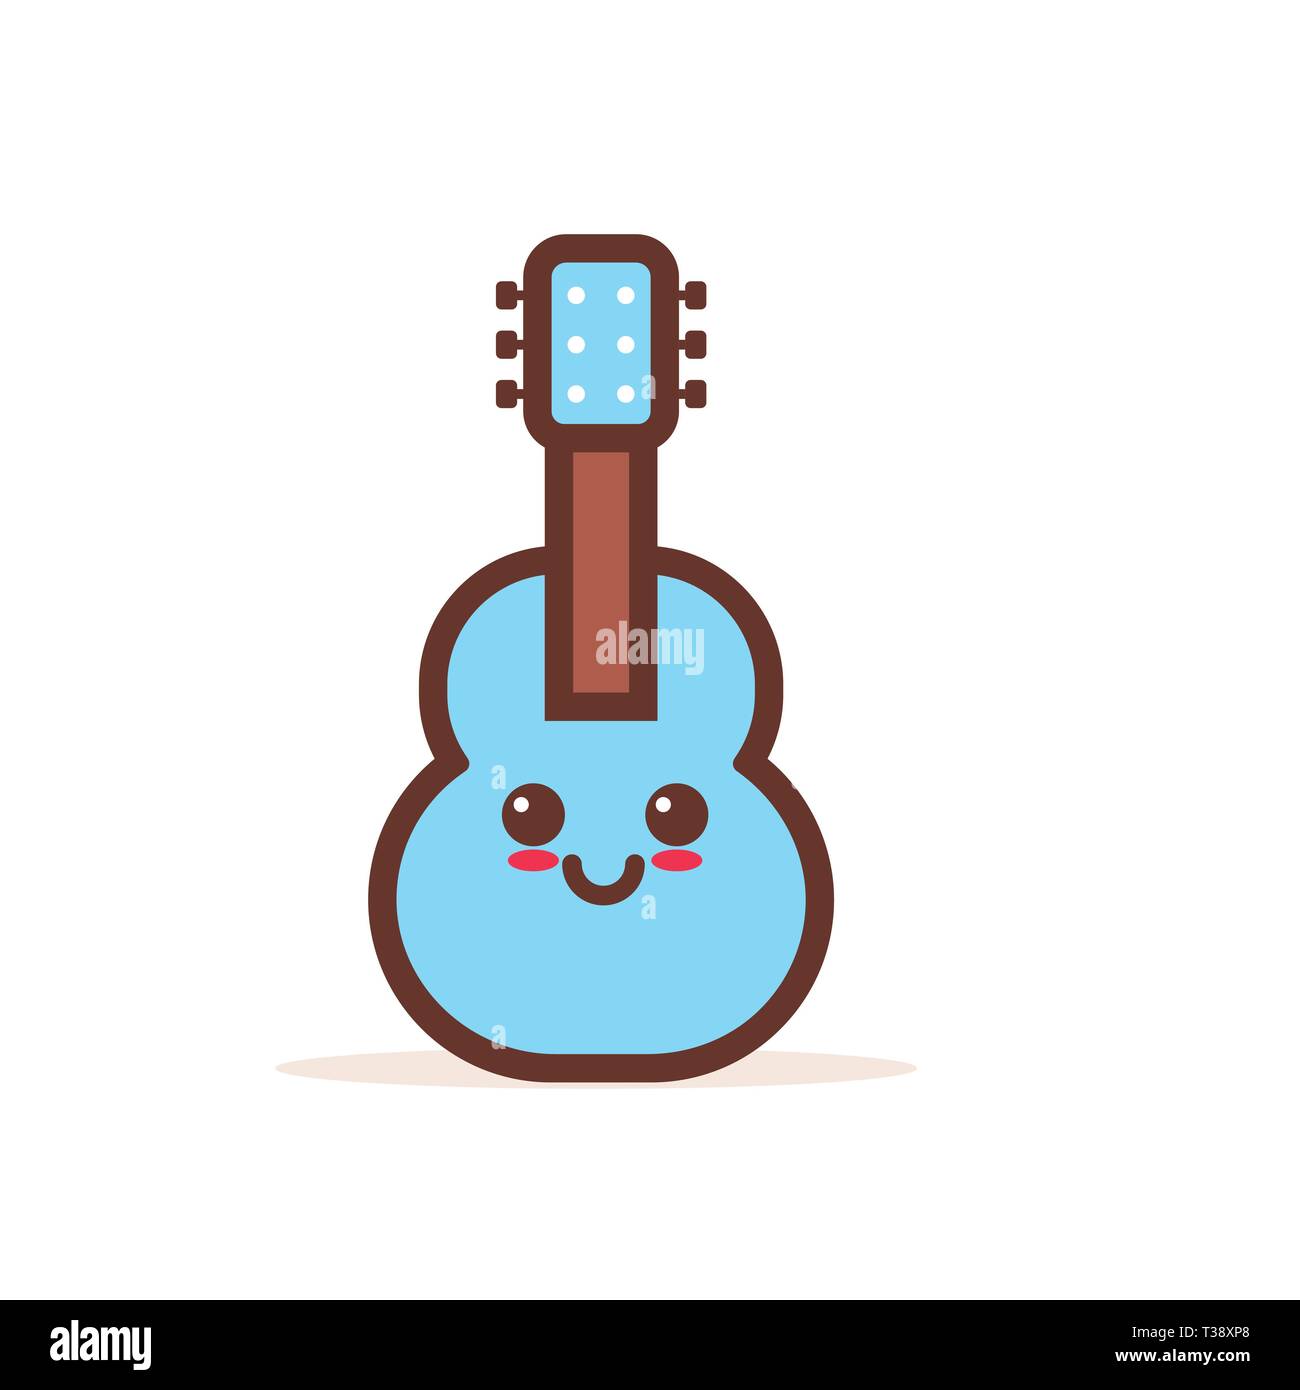 Cute dibujos animados de guitarra clásica de madera azul personaje de comic  con rostro sonriente feliz emoji estilo kawaii instrumento musical acústico  concepto vector illustra Imagen Vector de stock - Alamy